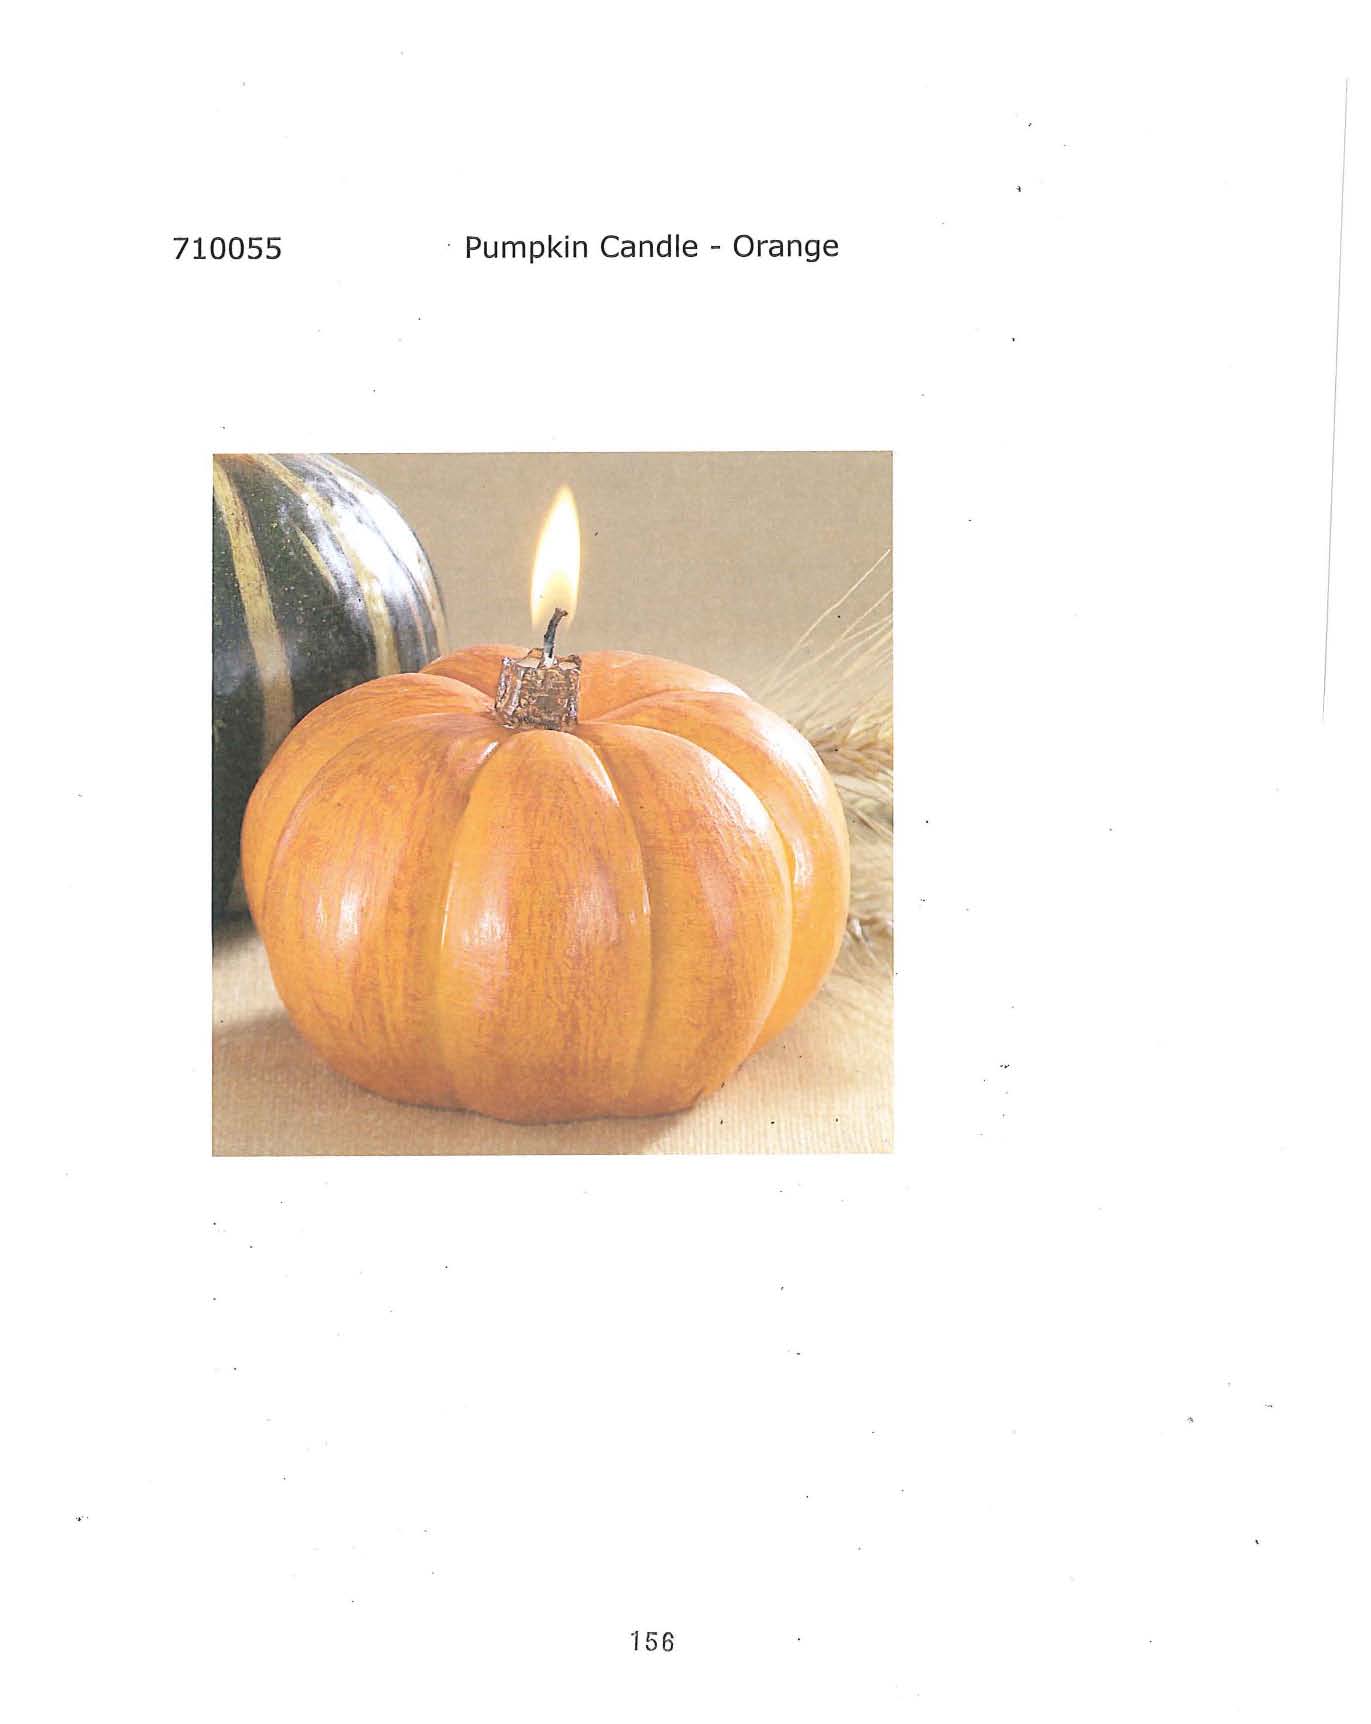 Pumpkin Candle - Orange